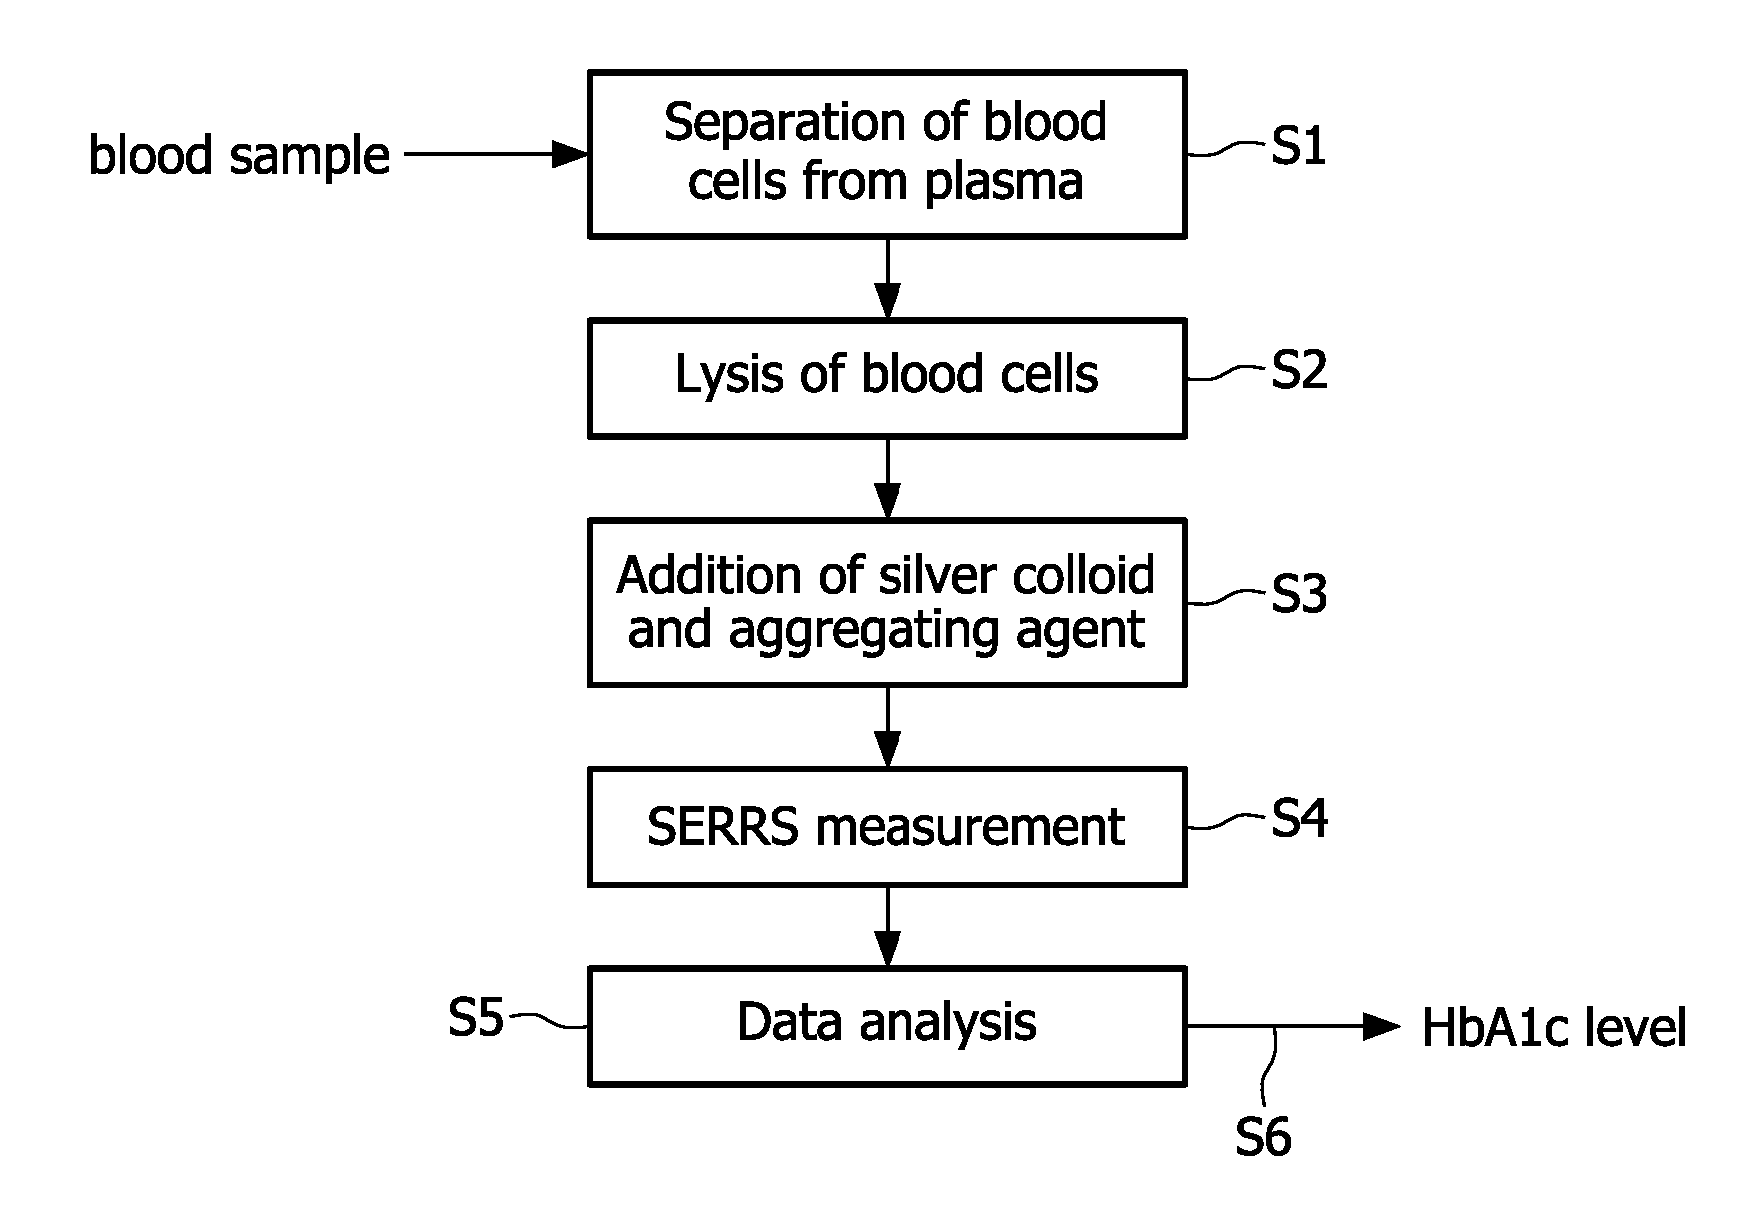 Quantitative measurement of glycated hemoglobin